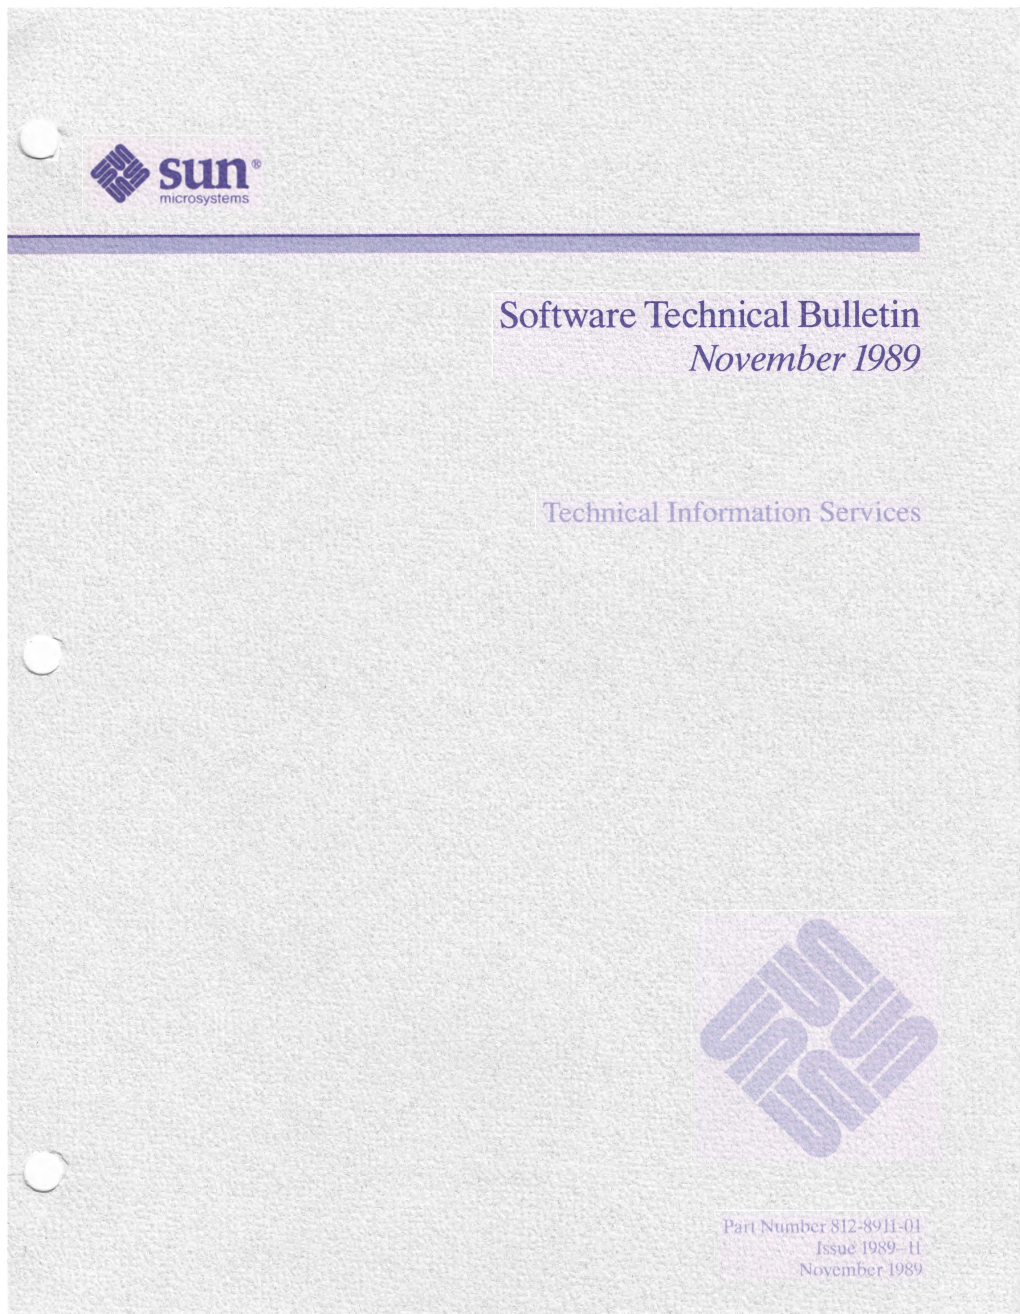 Software Technical Bulletin November 1989 812-8911-01